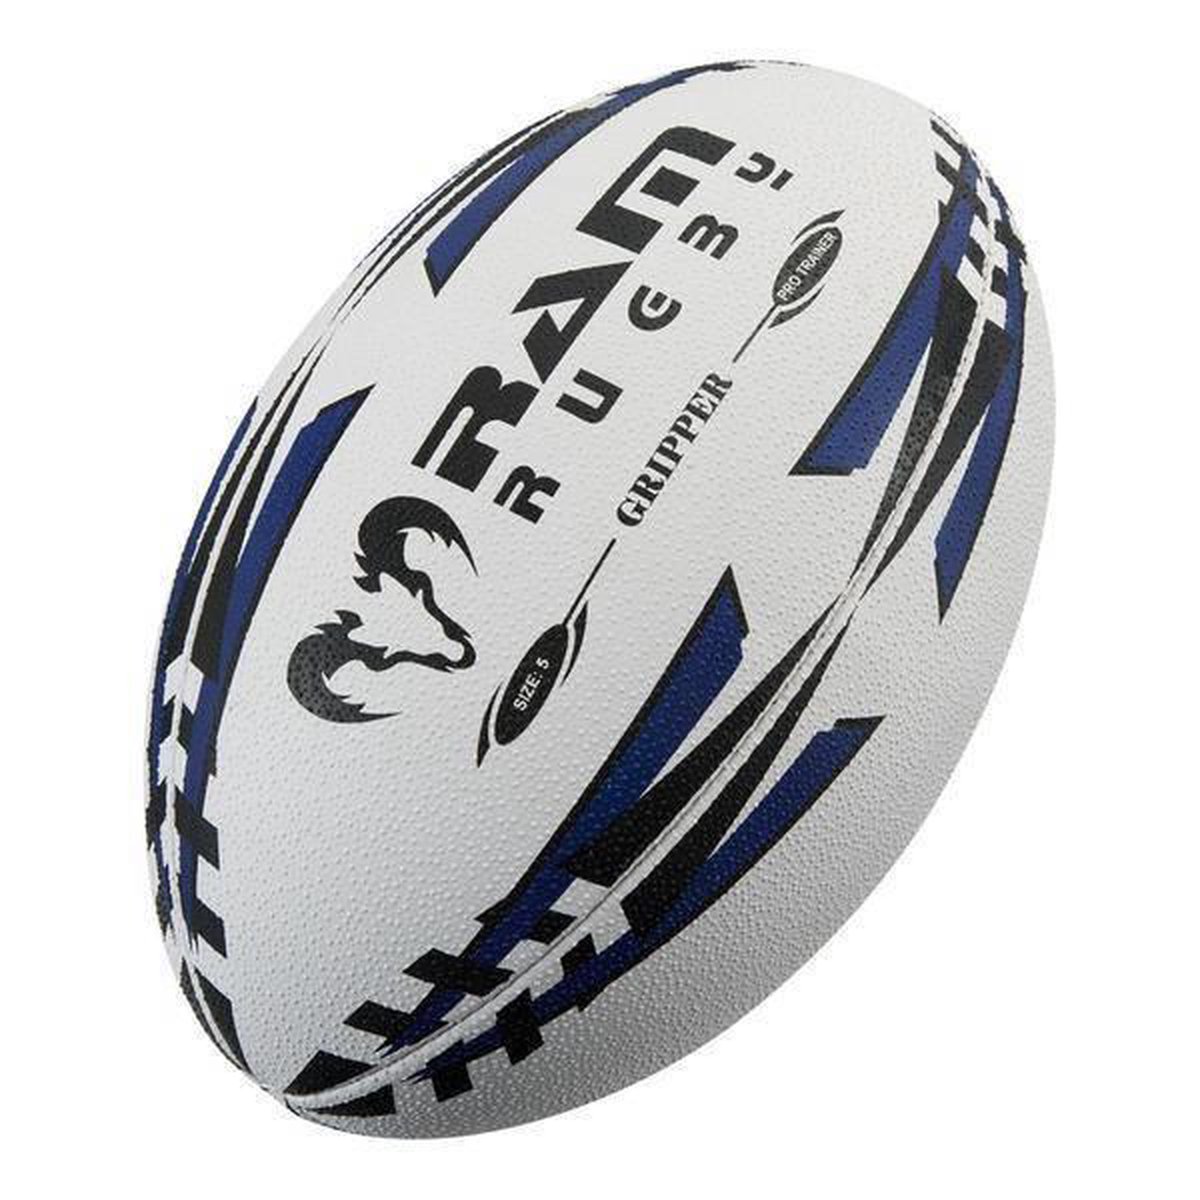 Gripper Pro rugbybal - Jeugd wedstrijdbal - 3D grip - Maat 4 - Blauw